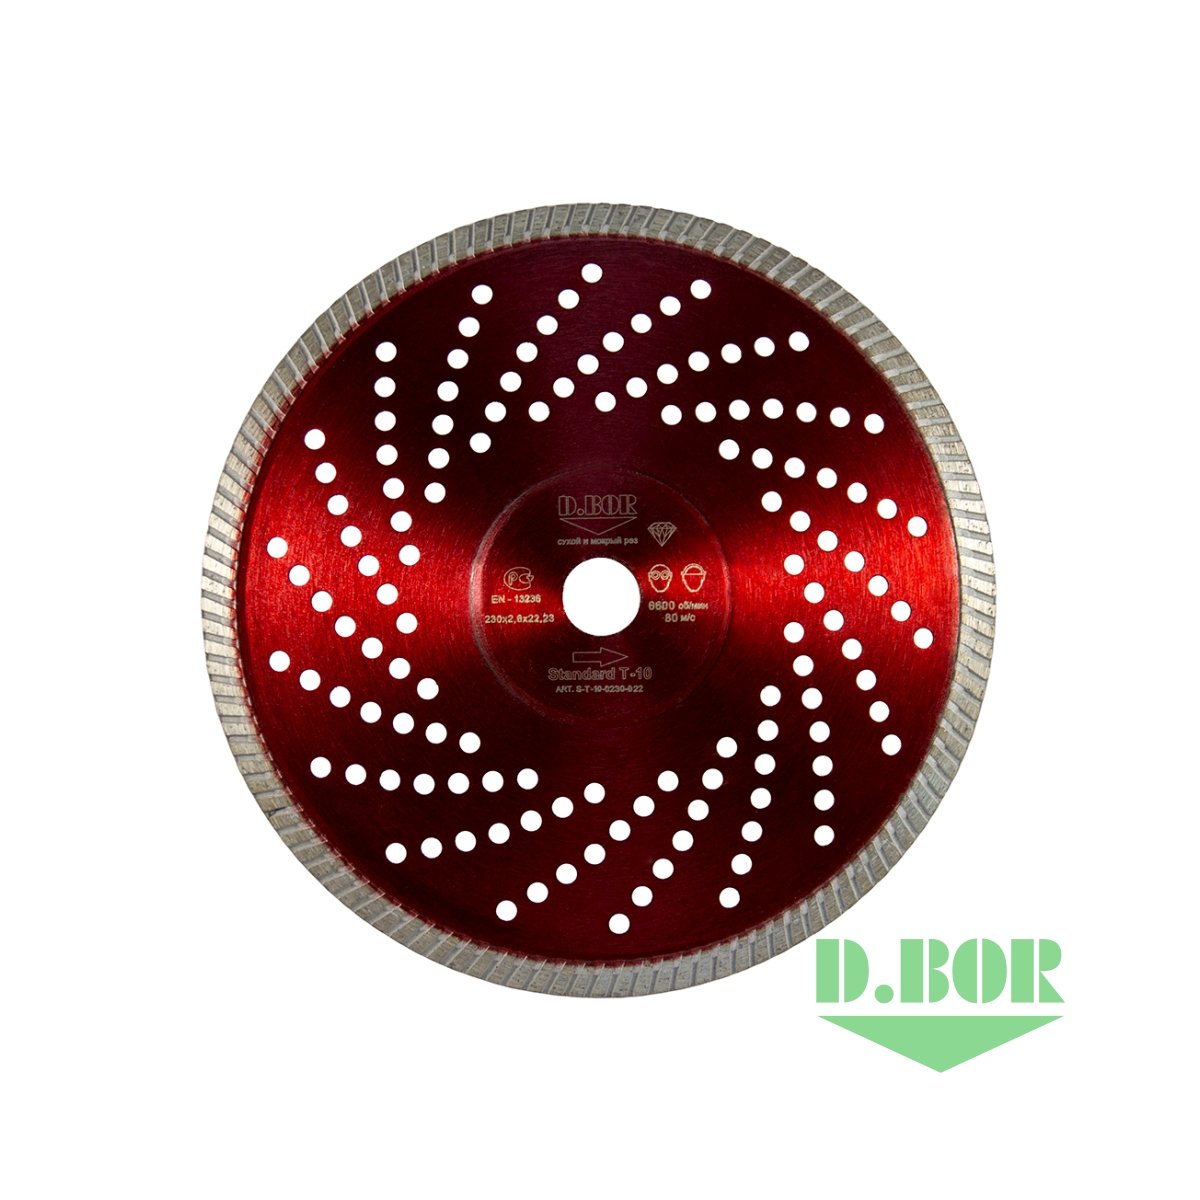 Алмазный диск Standard T-10, 230x2,6x22,23 (арт. S-T-10-0230-022) "D.BOR"